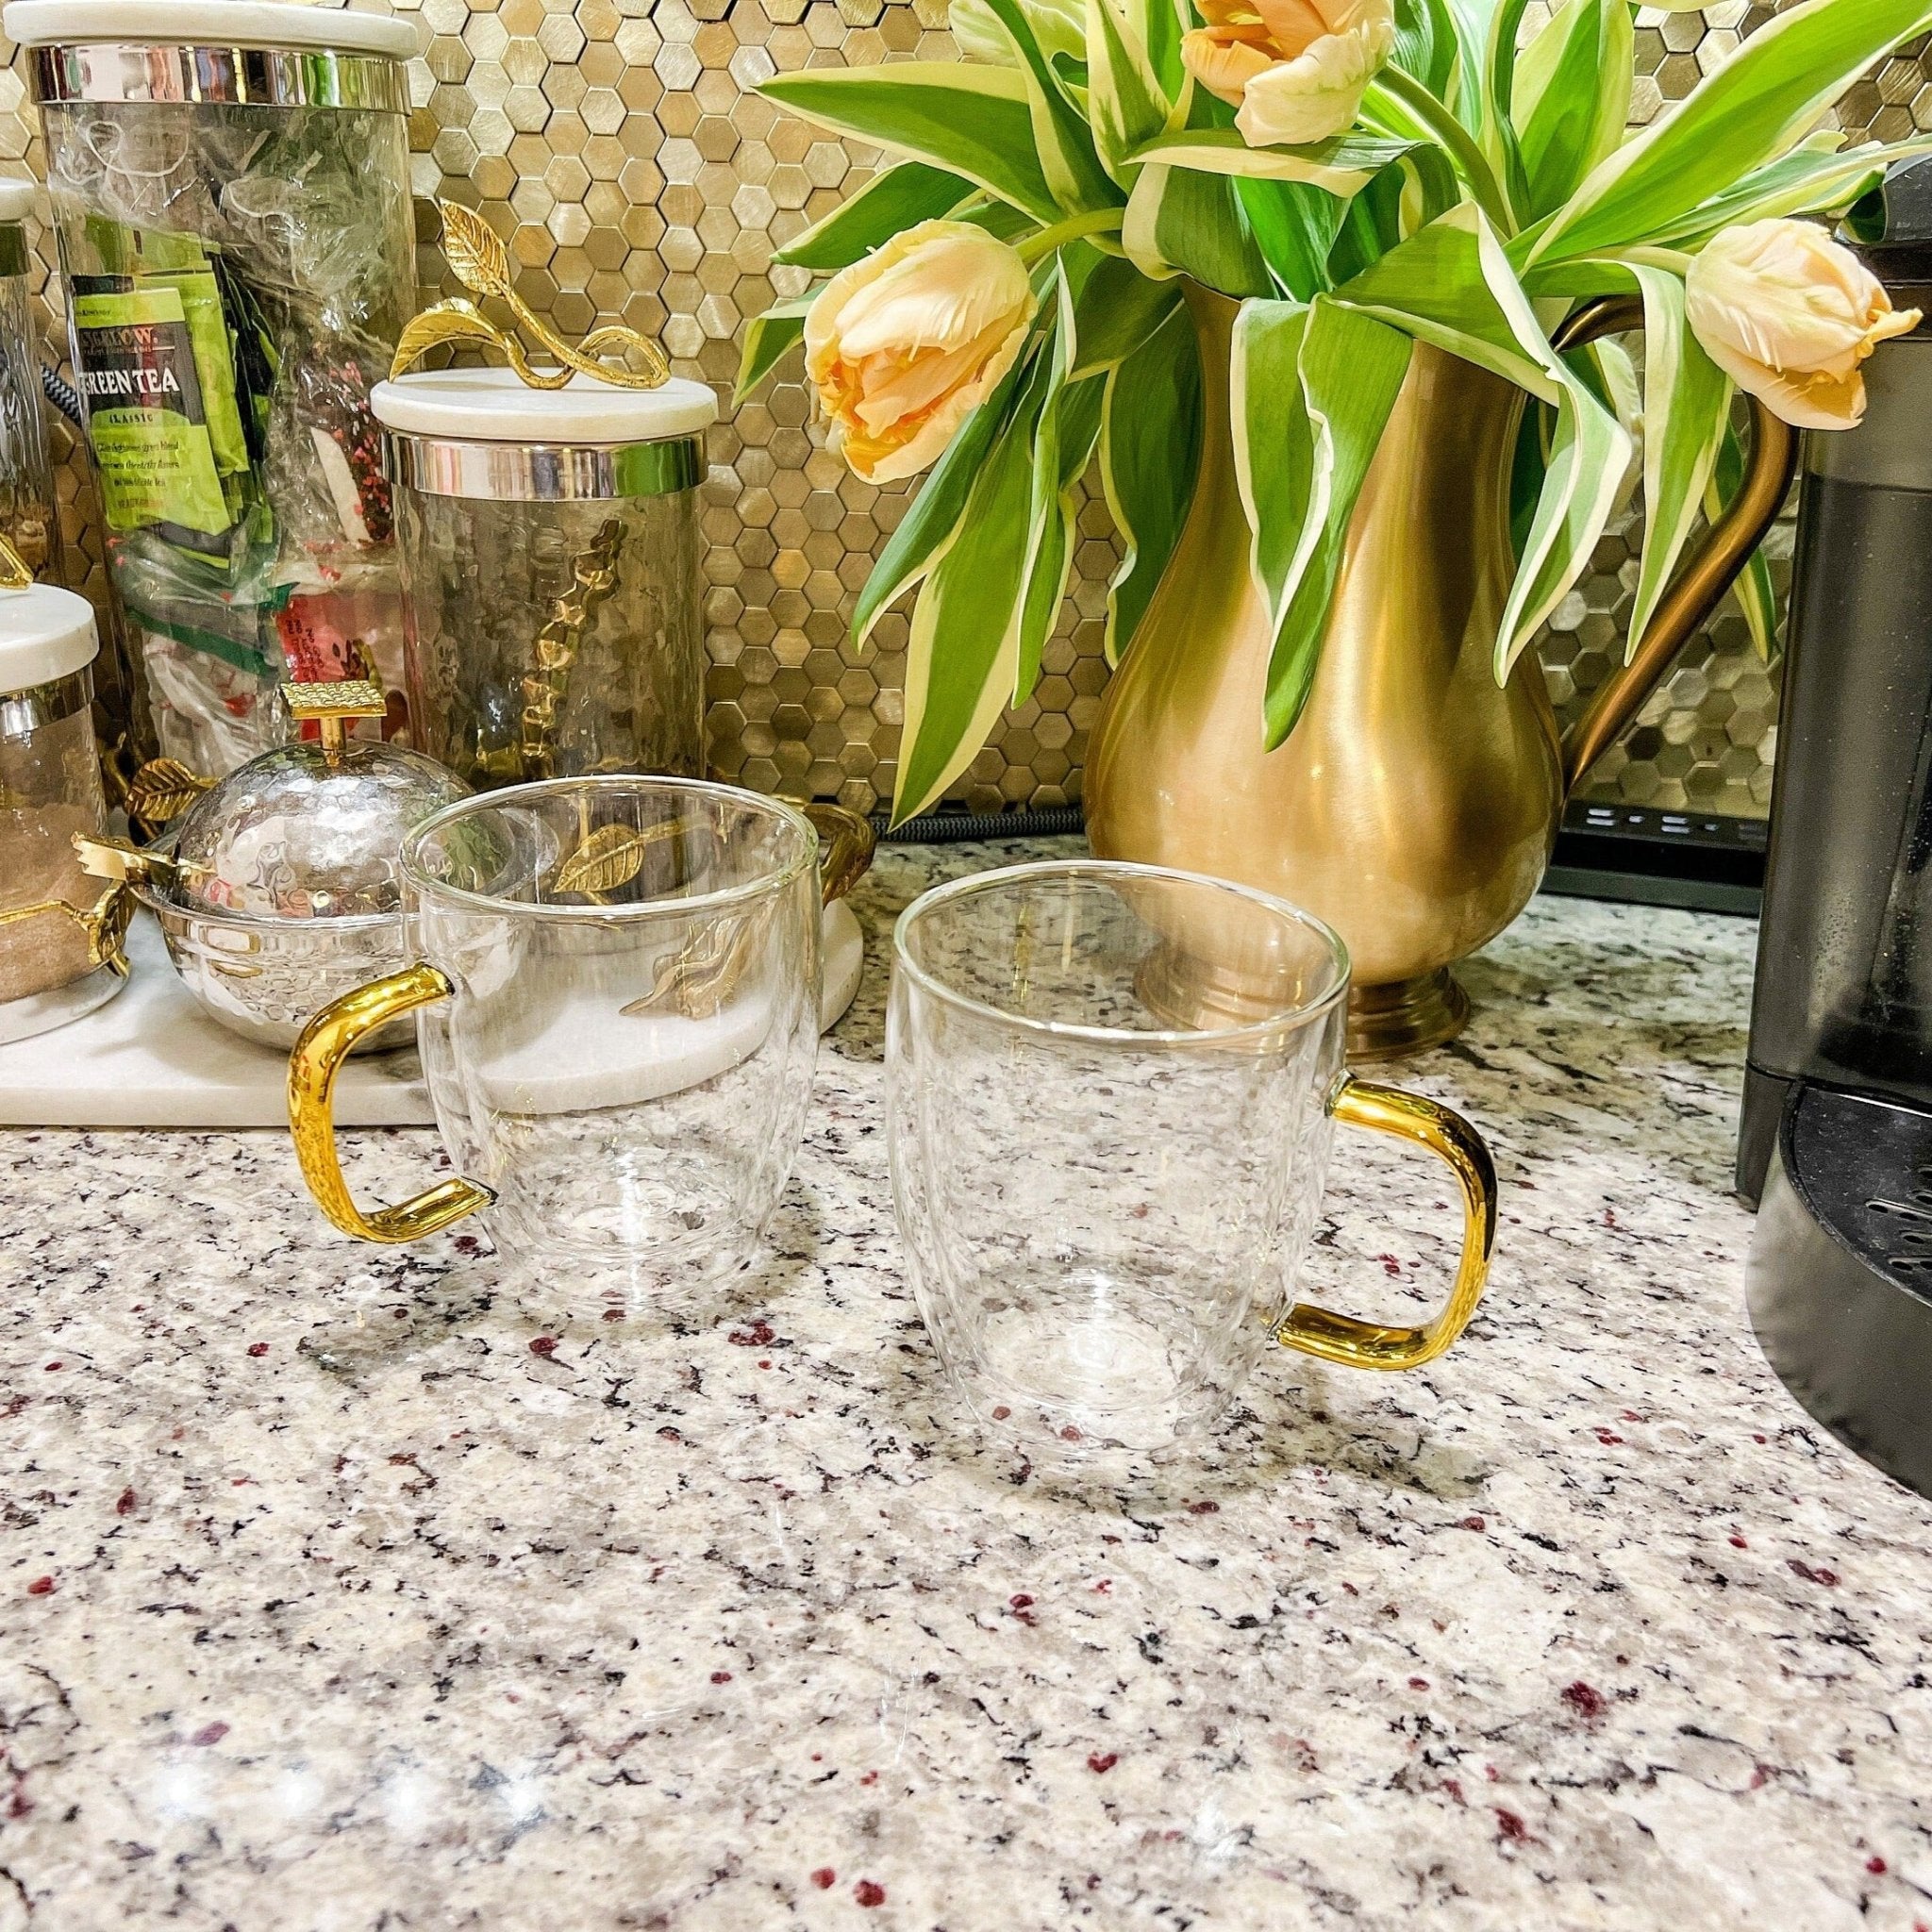 Double Wall Glass Coffee Mugs Set of 2 - 16 Oz, Clear, Microwave